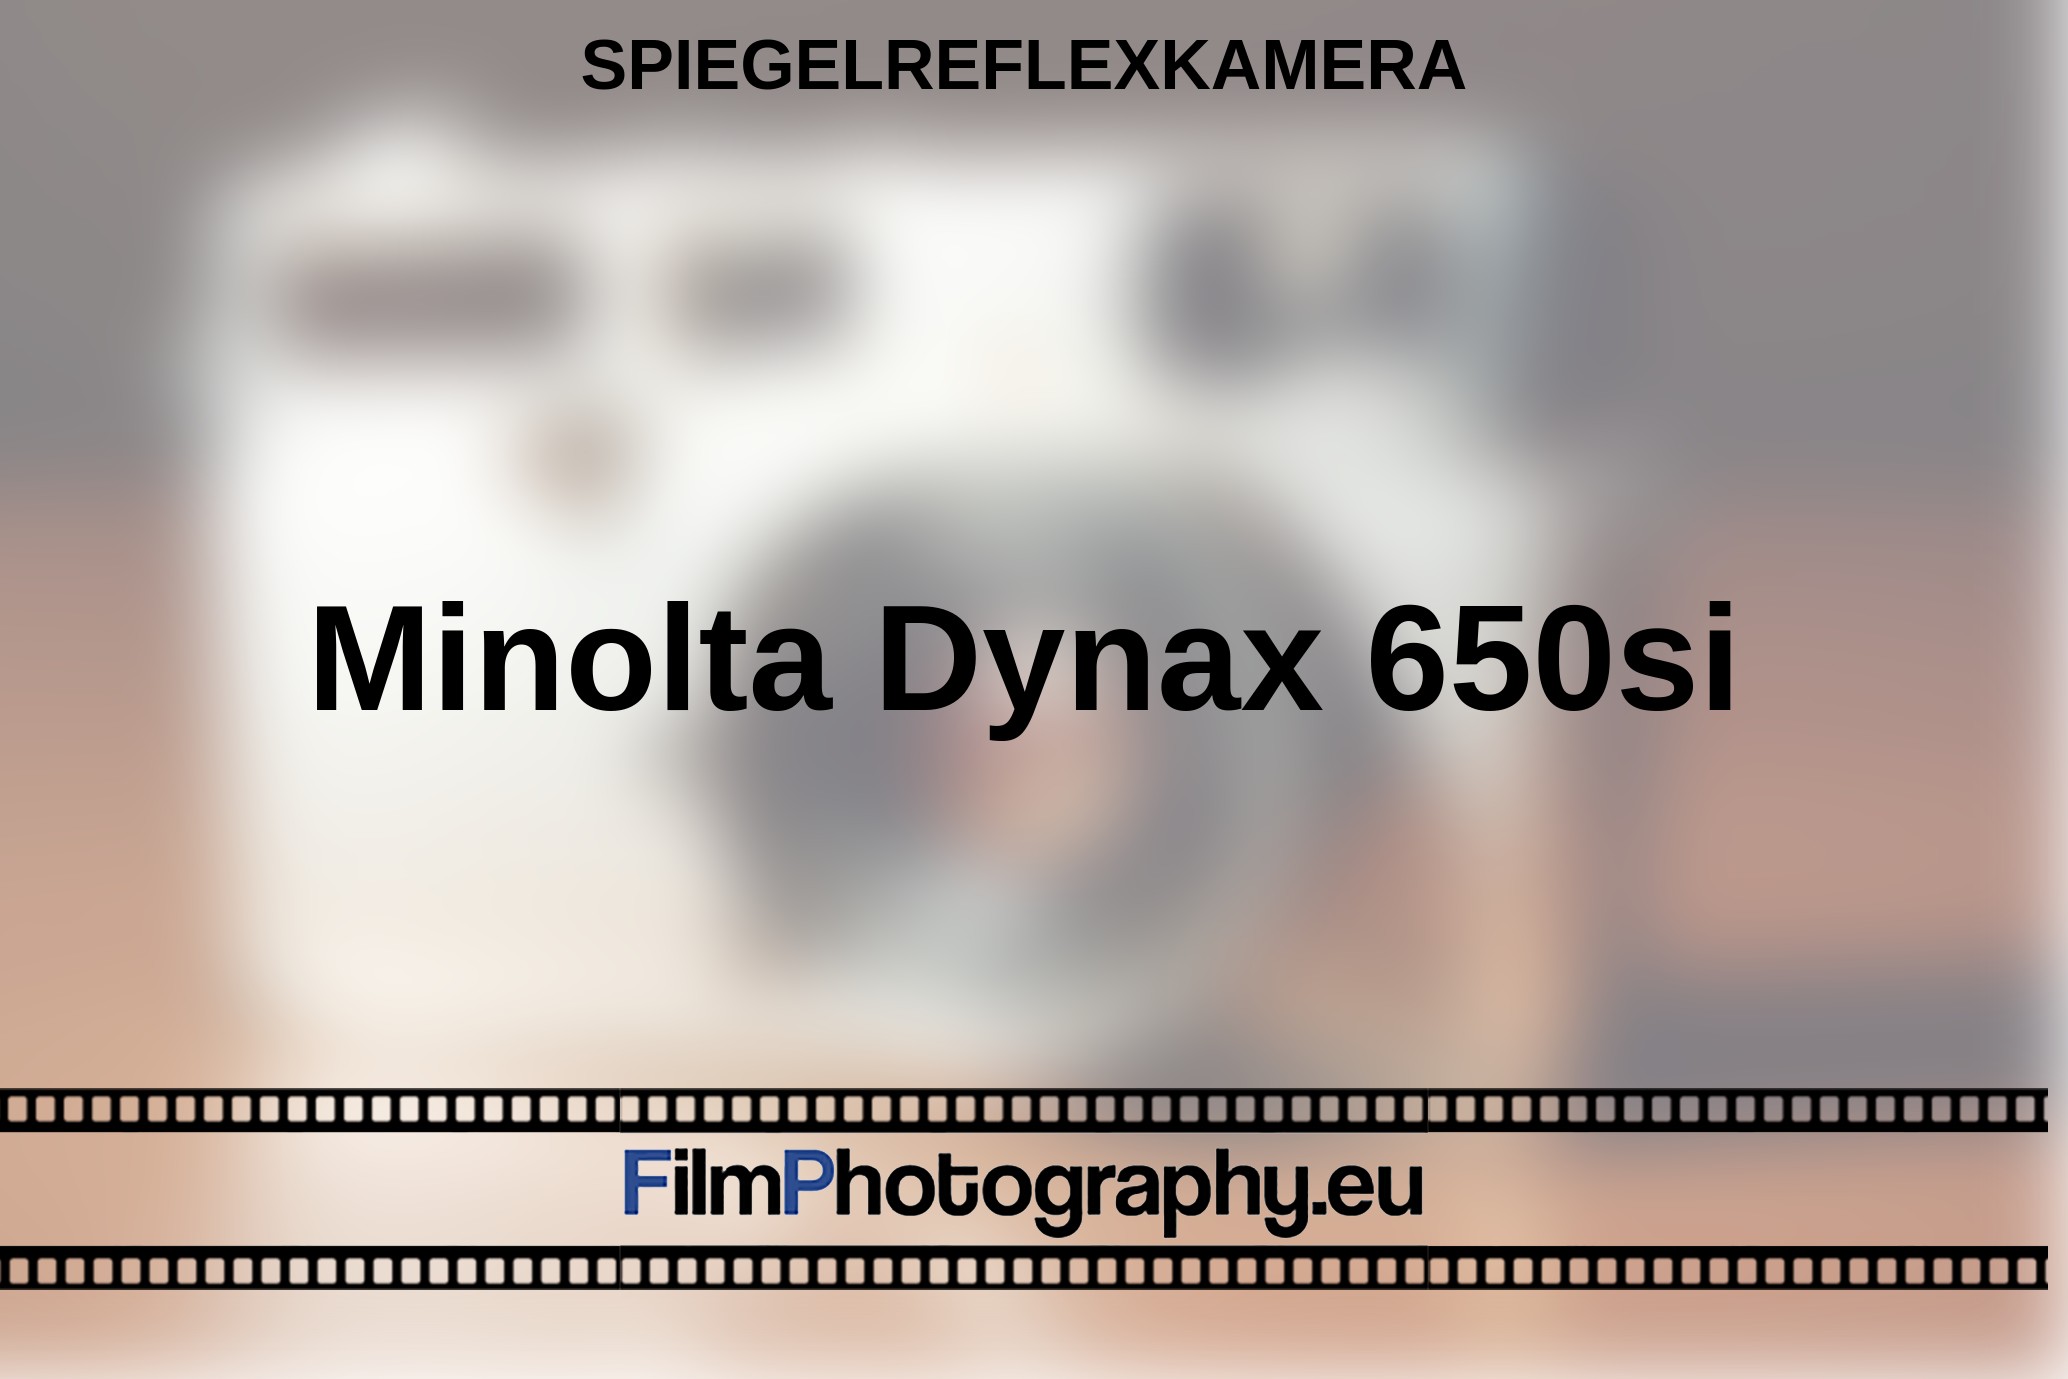 Minolta-Dynax-650si-Spiegelreflexkamera-bnv.jpg